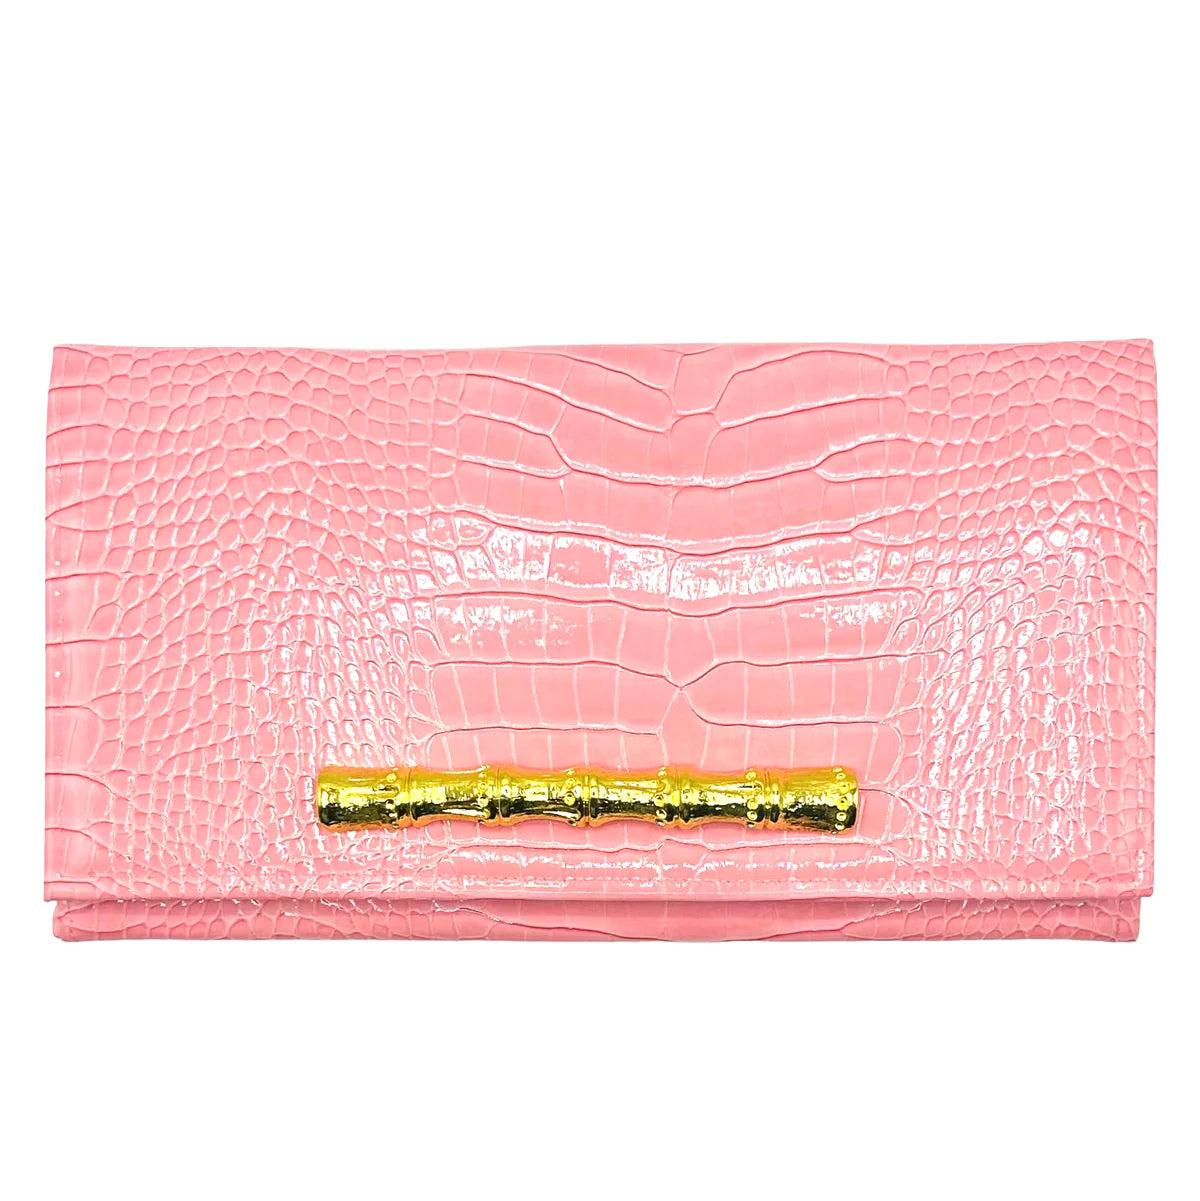 Garland Bag Julianne Clutch - Pink Croc